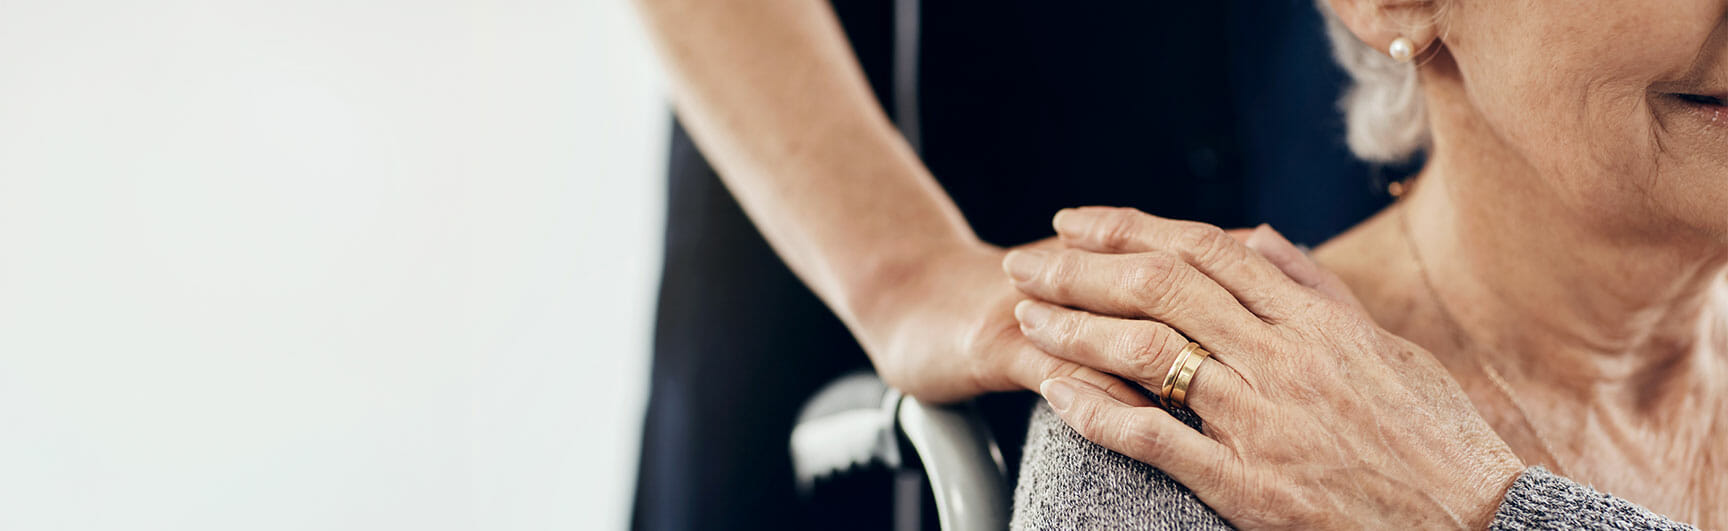 caretaker hand touching woman in wheelchair's hand